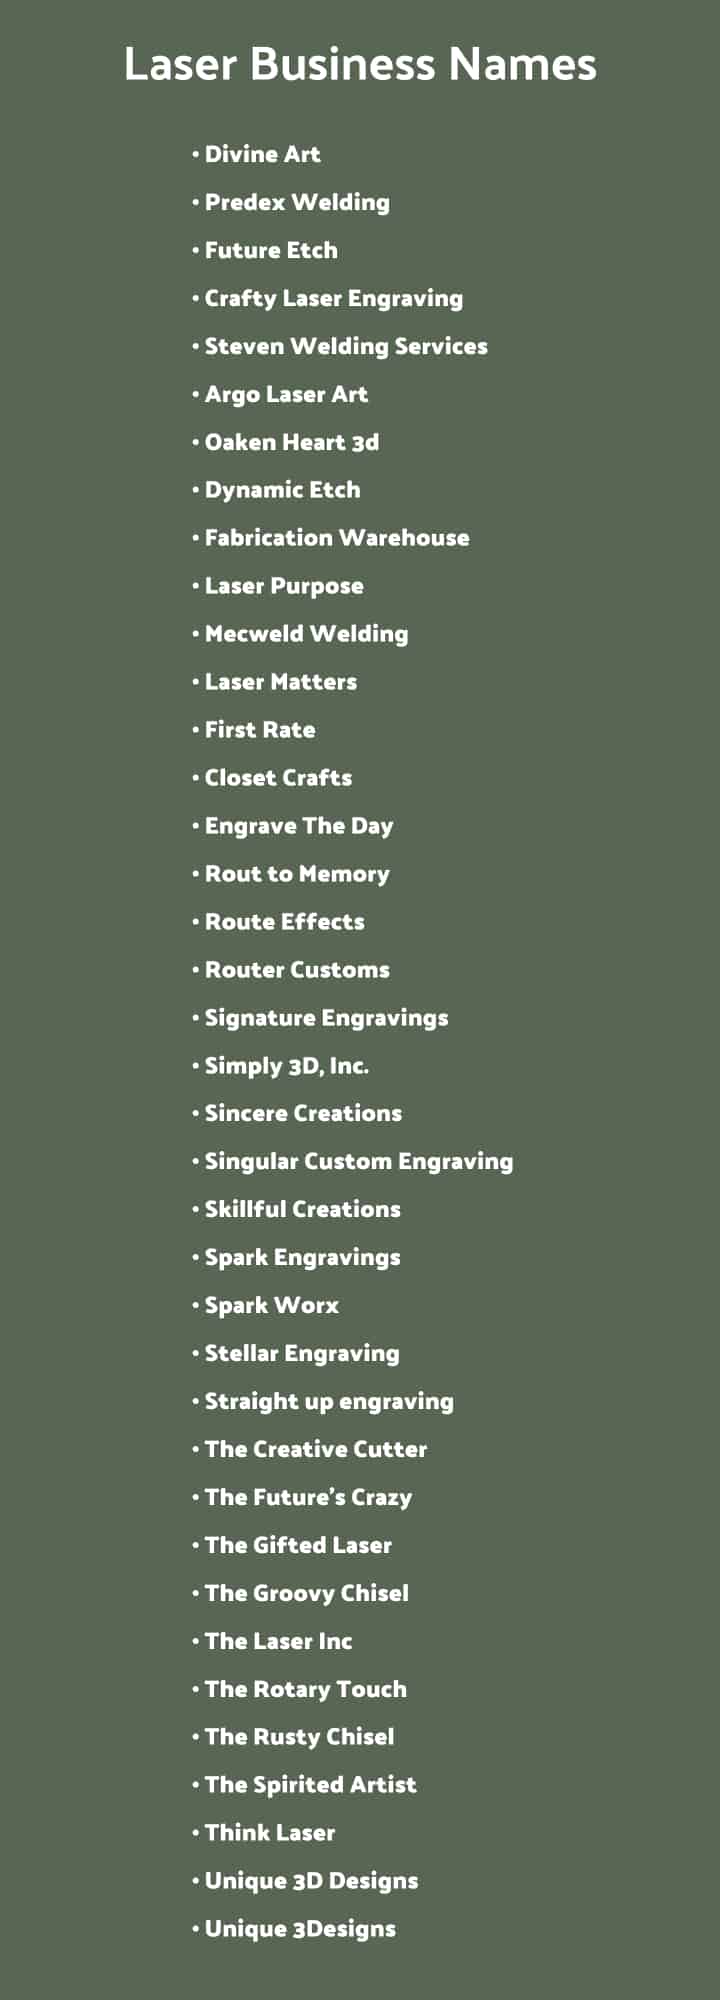 laser business name ideas list 